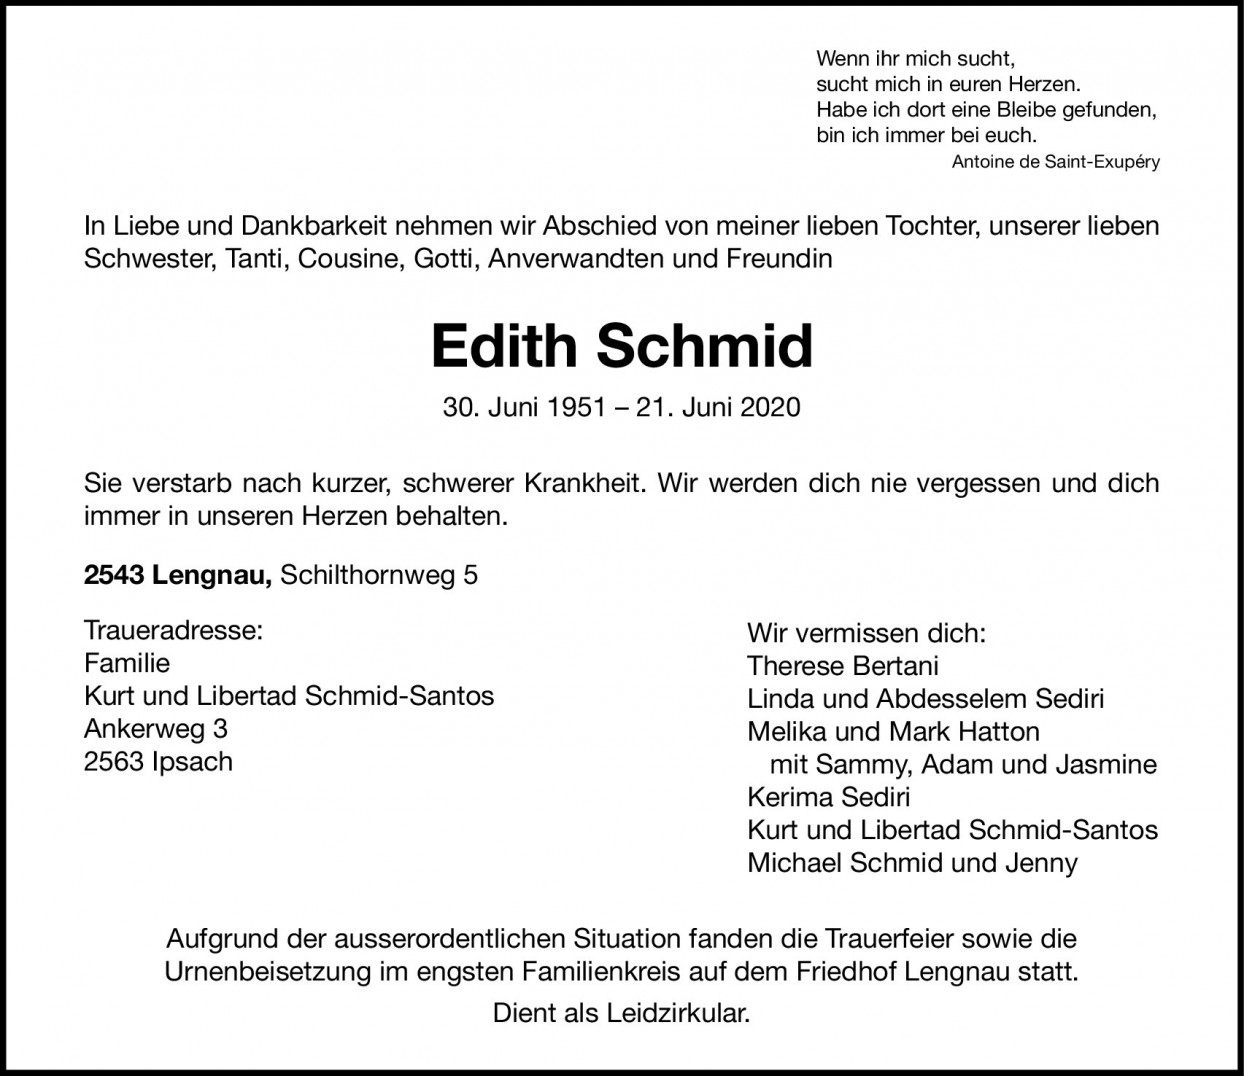 Edith Schmid